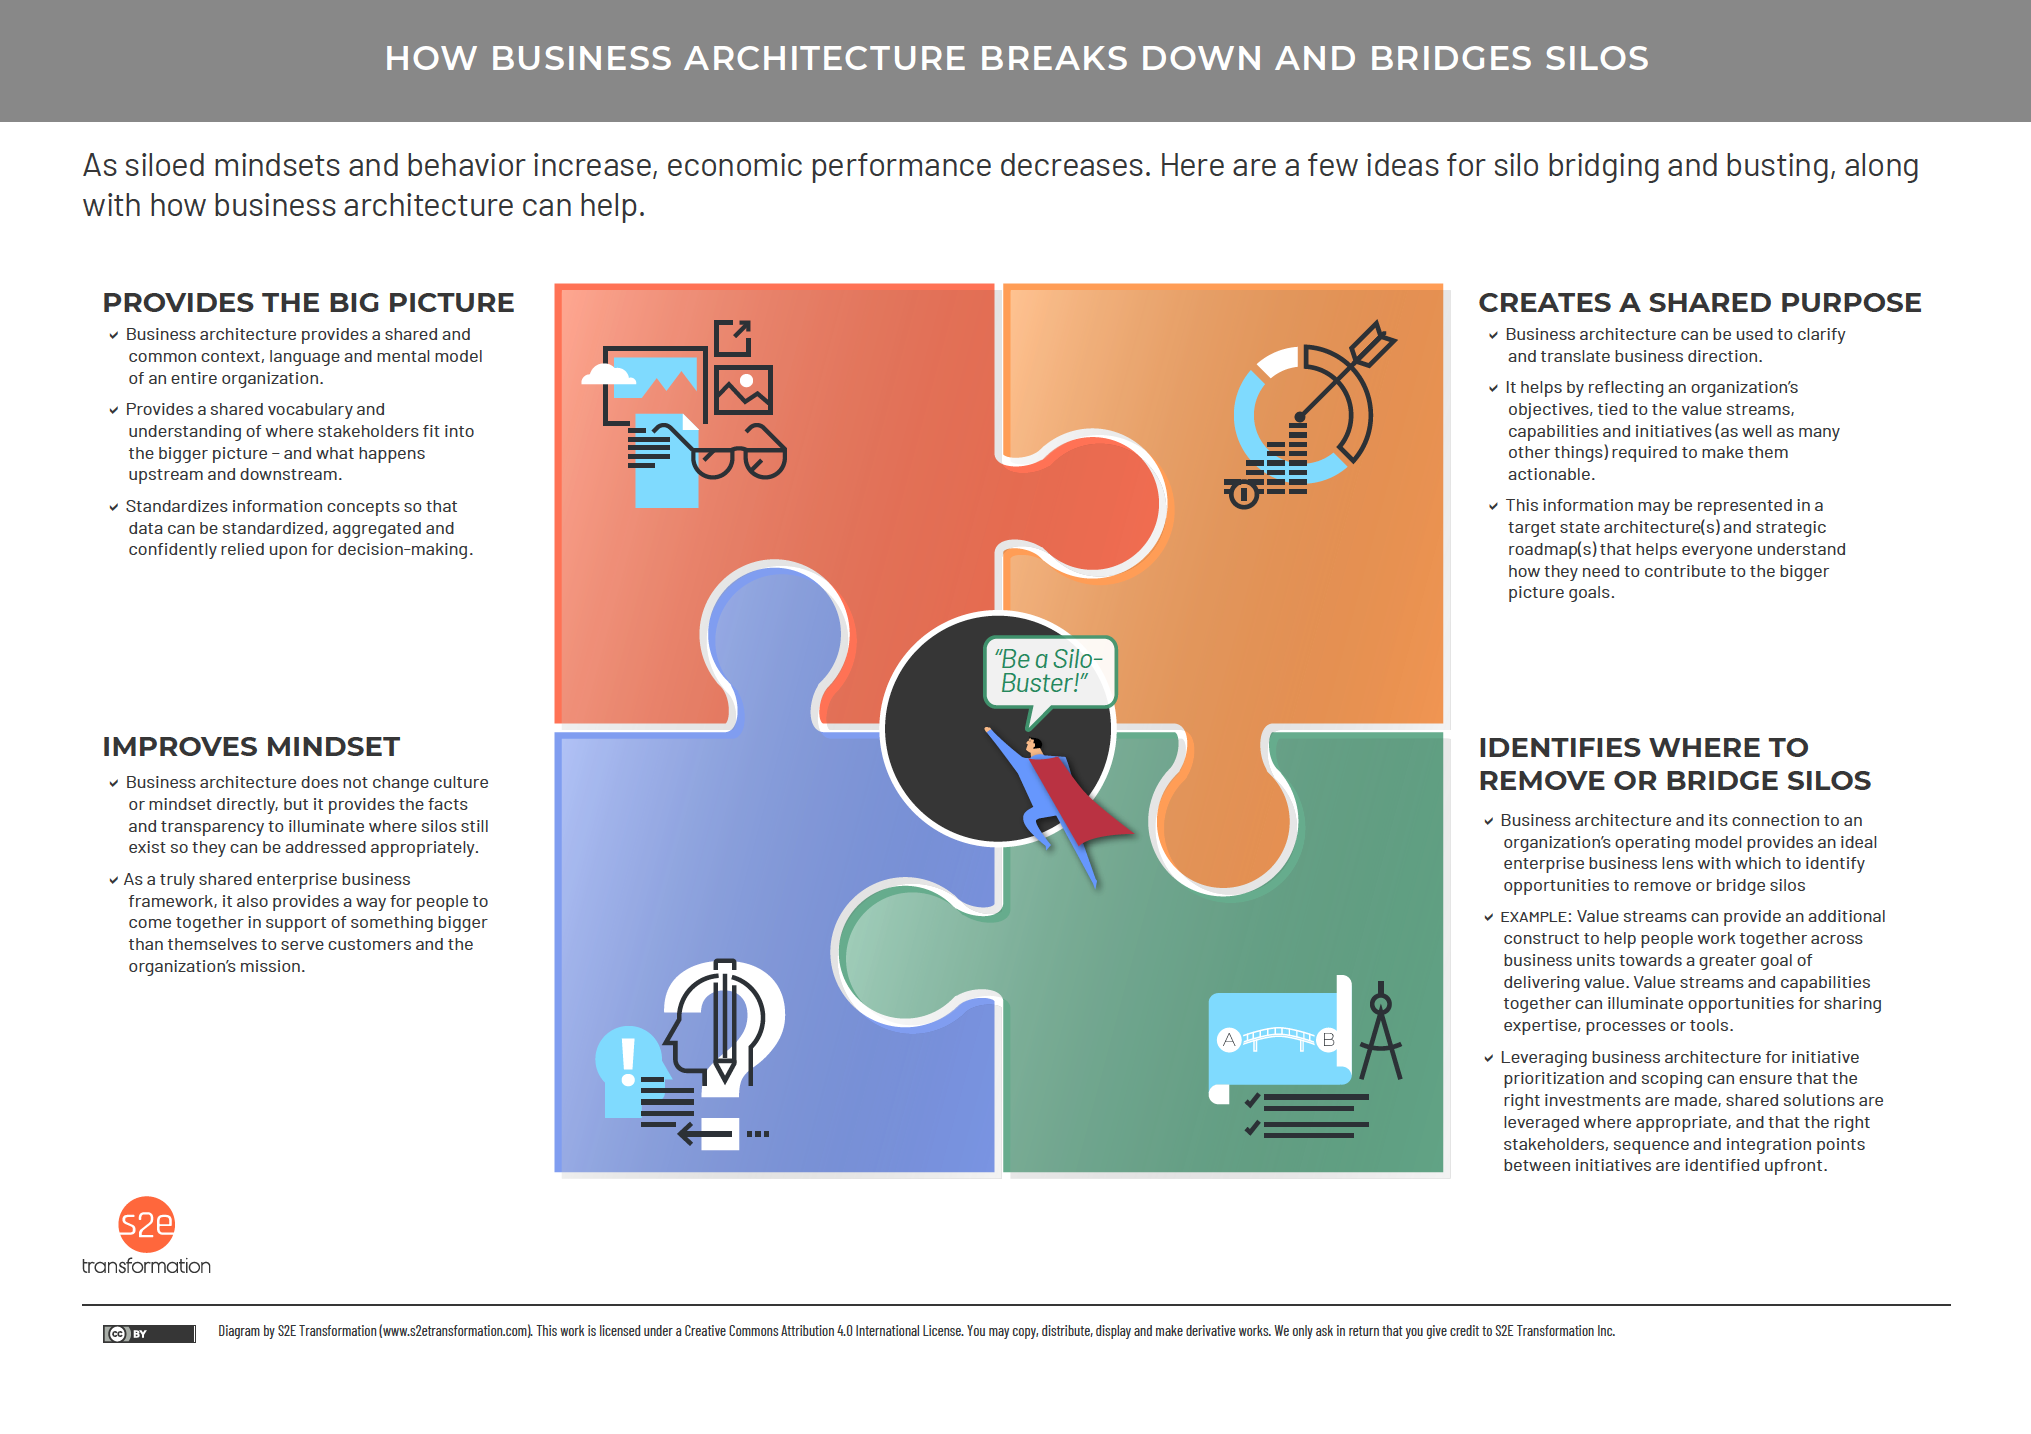 Business Architecture Breaks Down and Bridges Silos